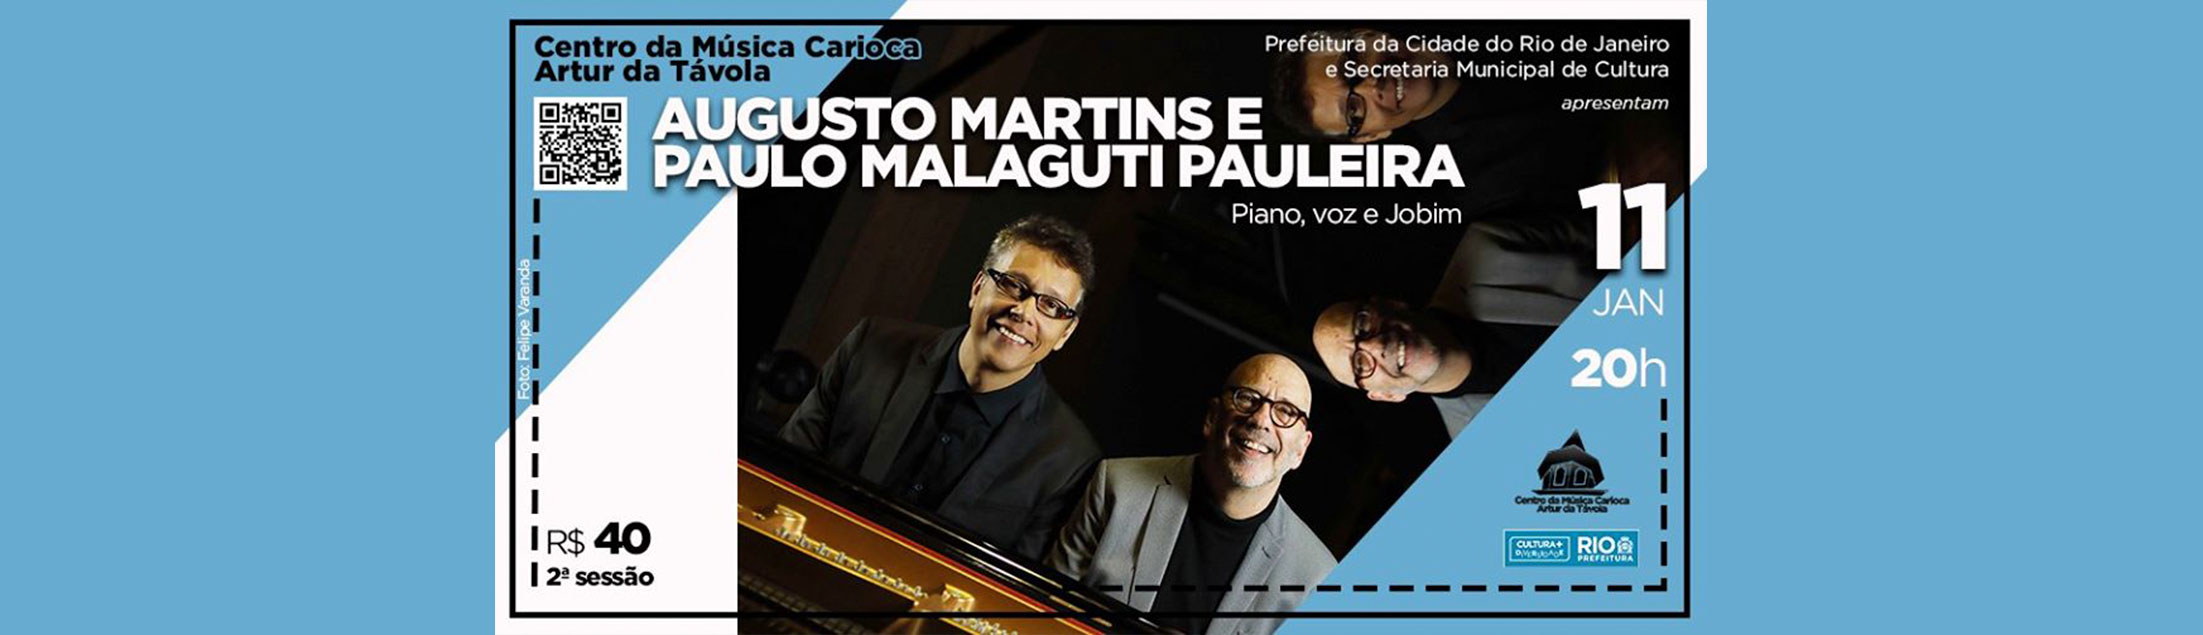 Augusto Martins e Paulo Malaguti Pauleira no show 'Piano, voz e Jobim'